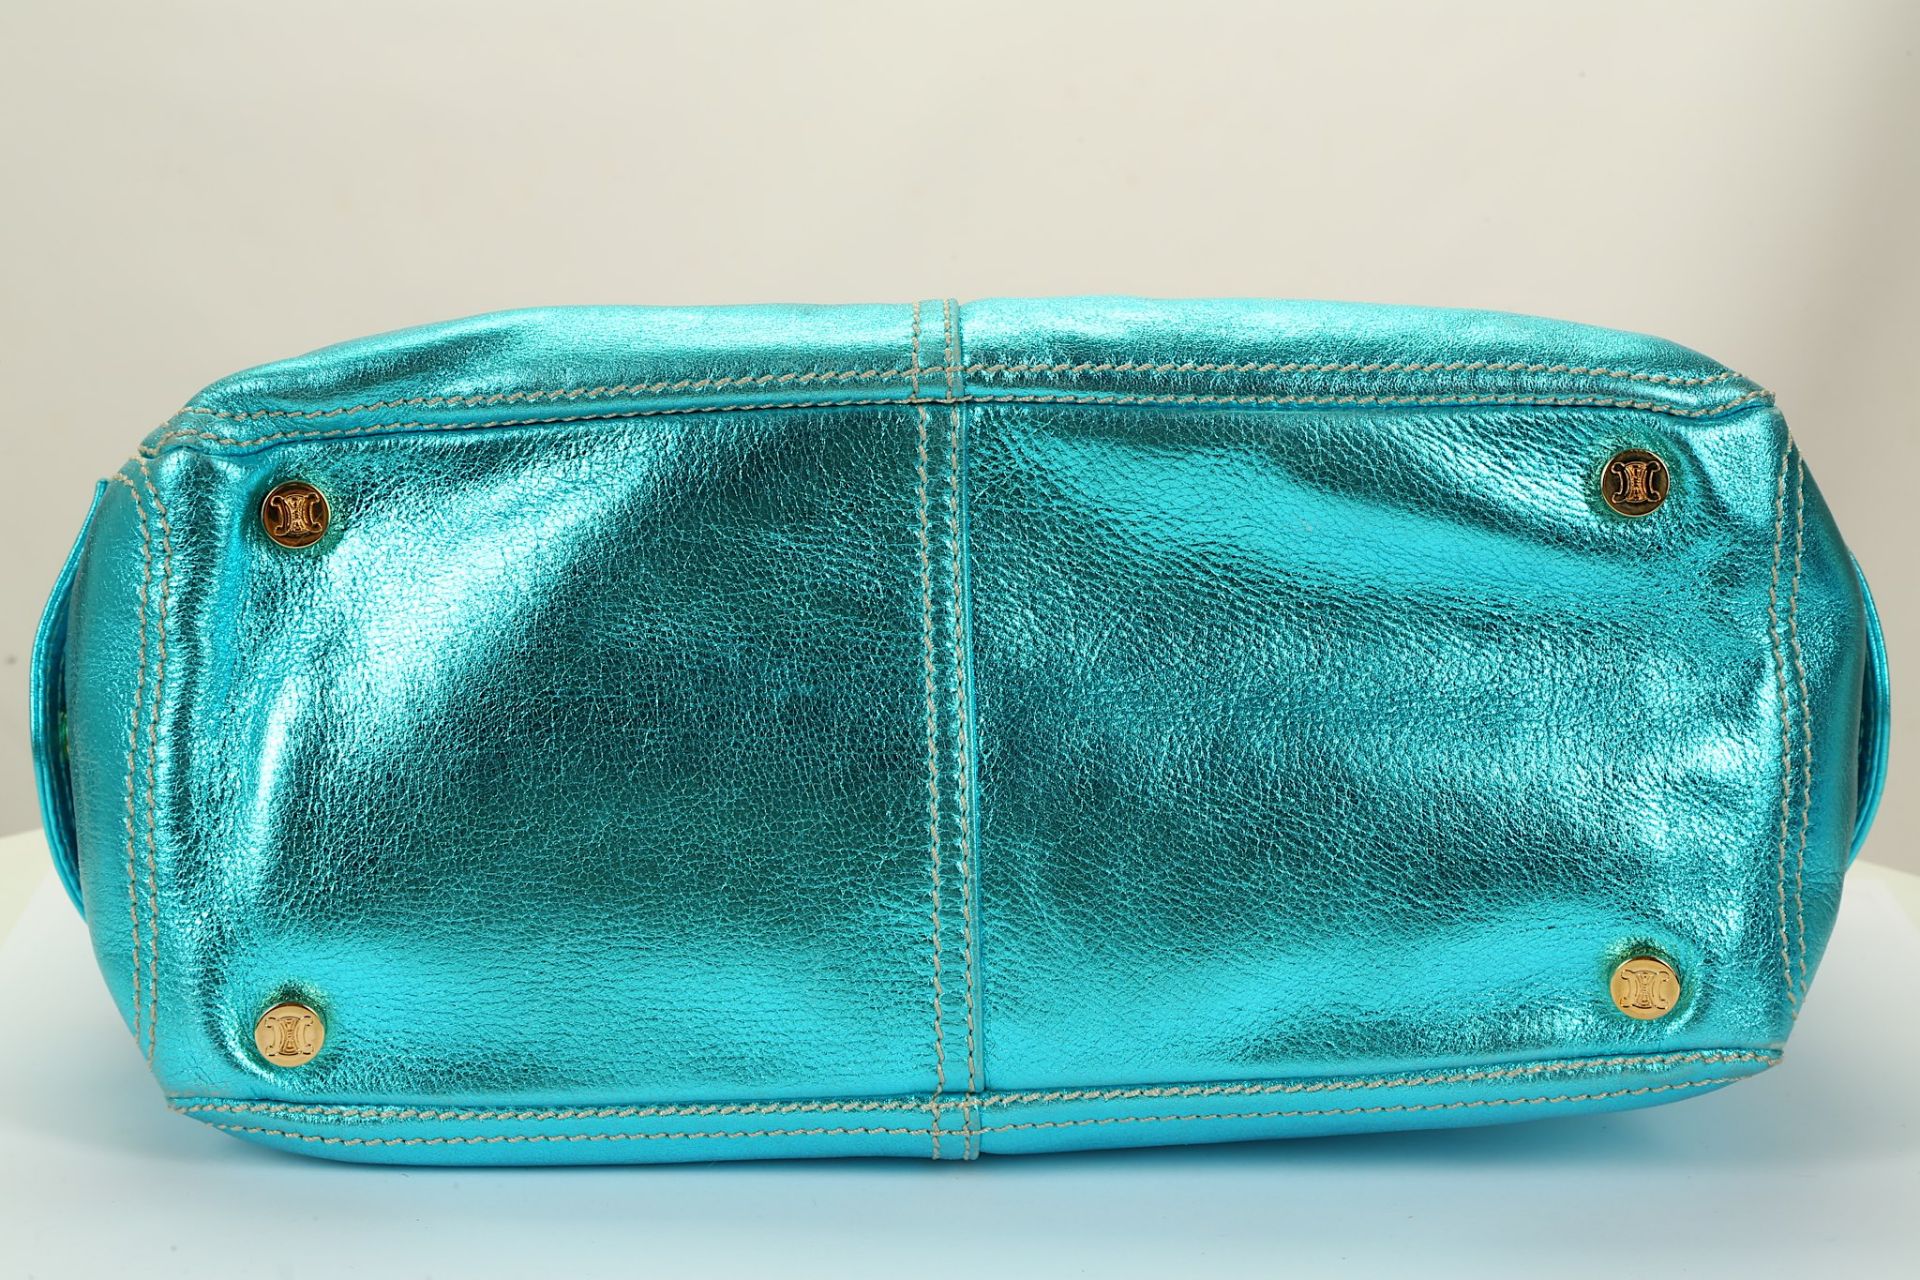 Celine Iridescent Blue Stitched Boogie Bag, gold t - Image 6 of 7